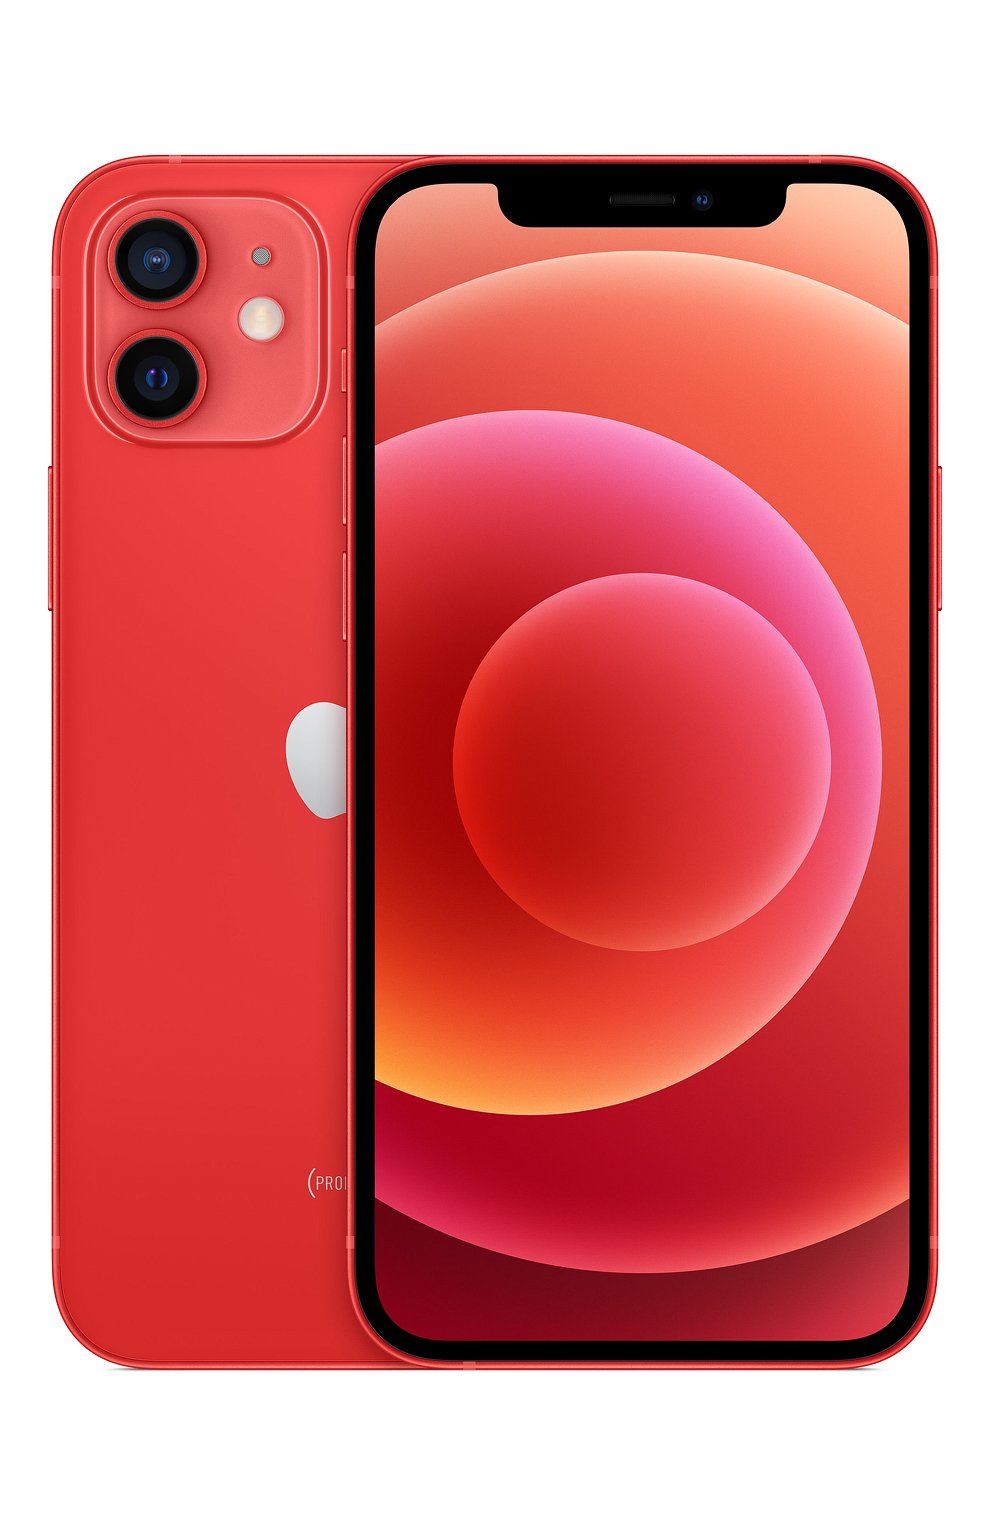 Iphone 12 128gb (product)red APPLE  (product)red цвета, арт. MGJD3RU/A | Фото 1 (Кросс-КТ: Деактивировано)